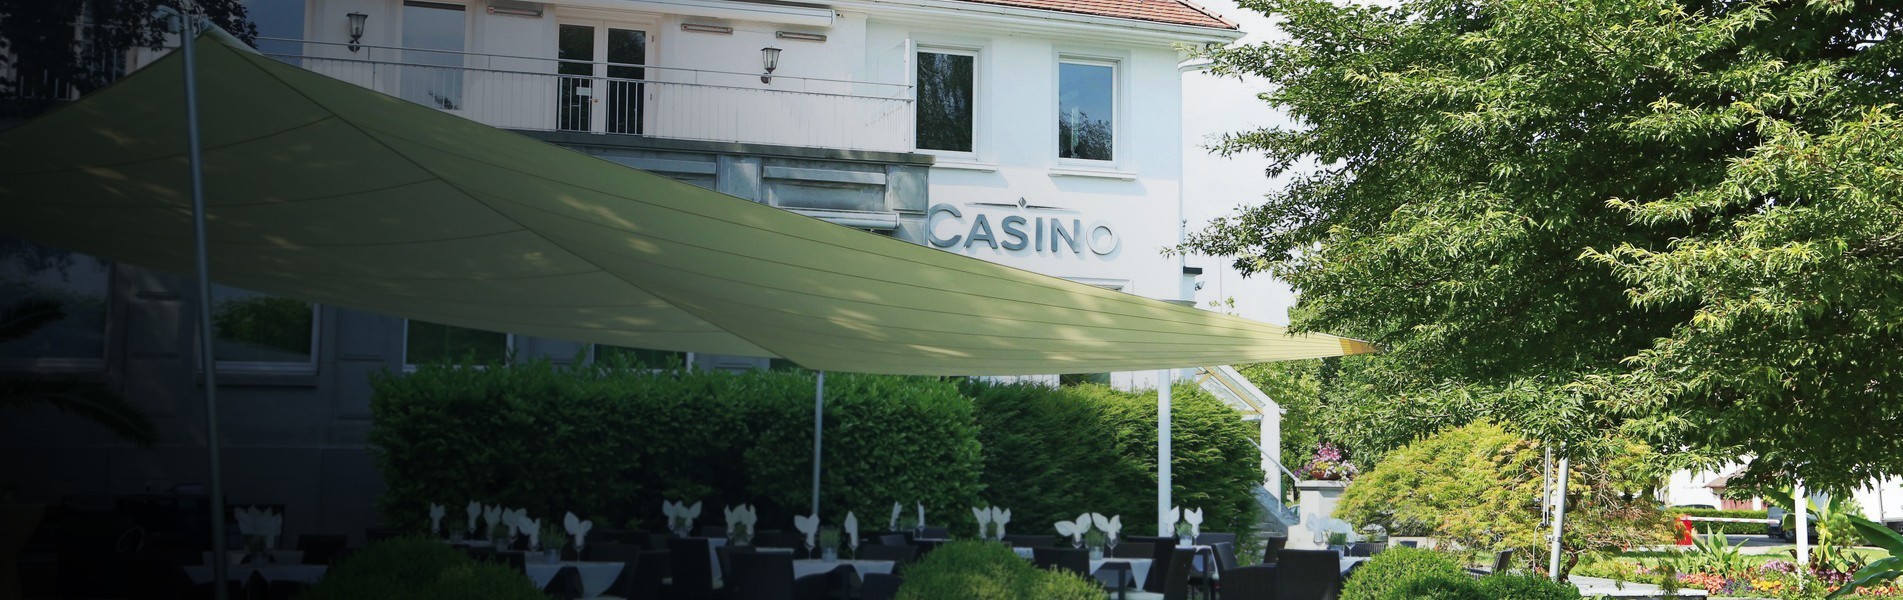 Casino Konstanz 1